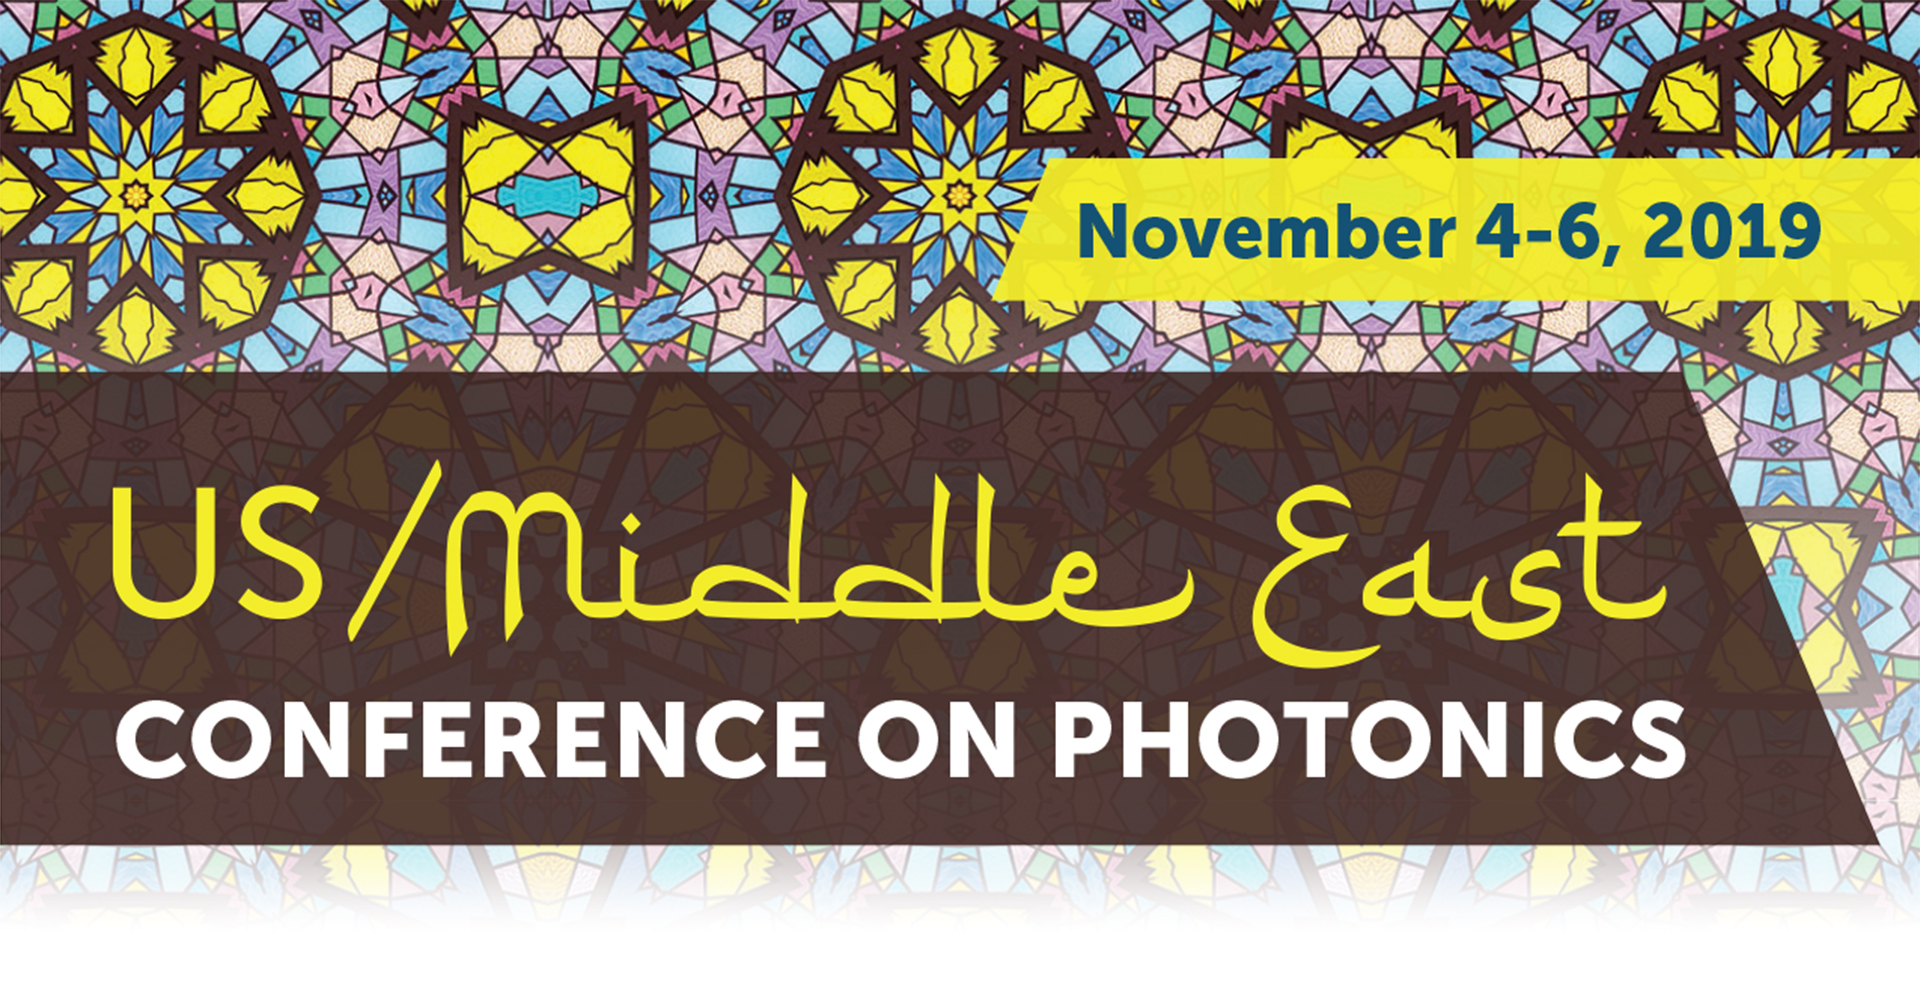 U.S./Middle East Conference on Photonics - November 4-6, 2019